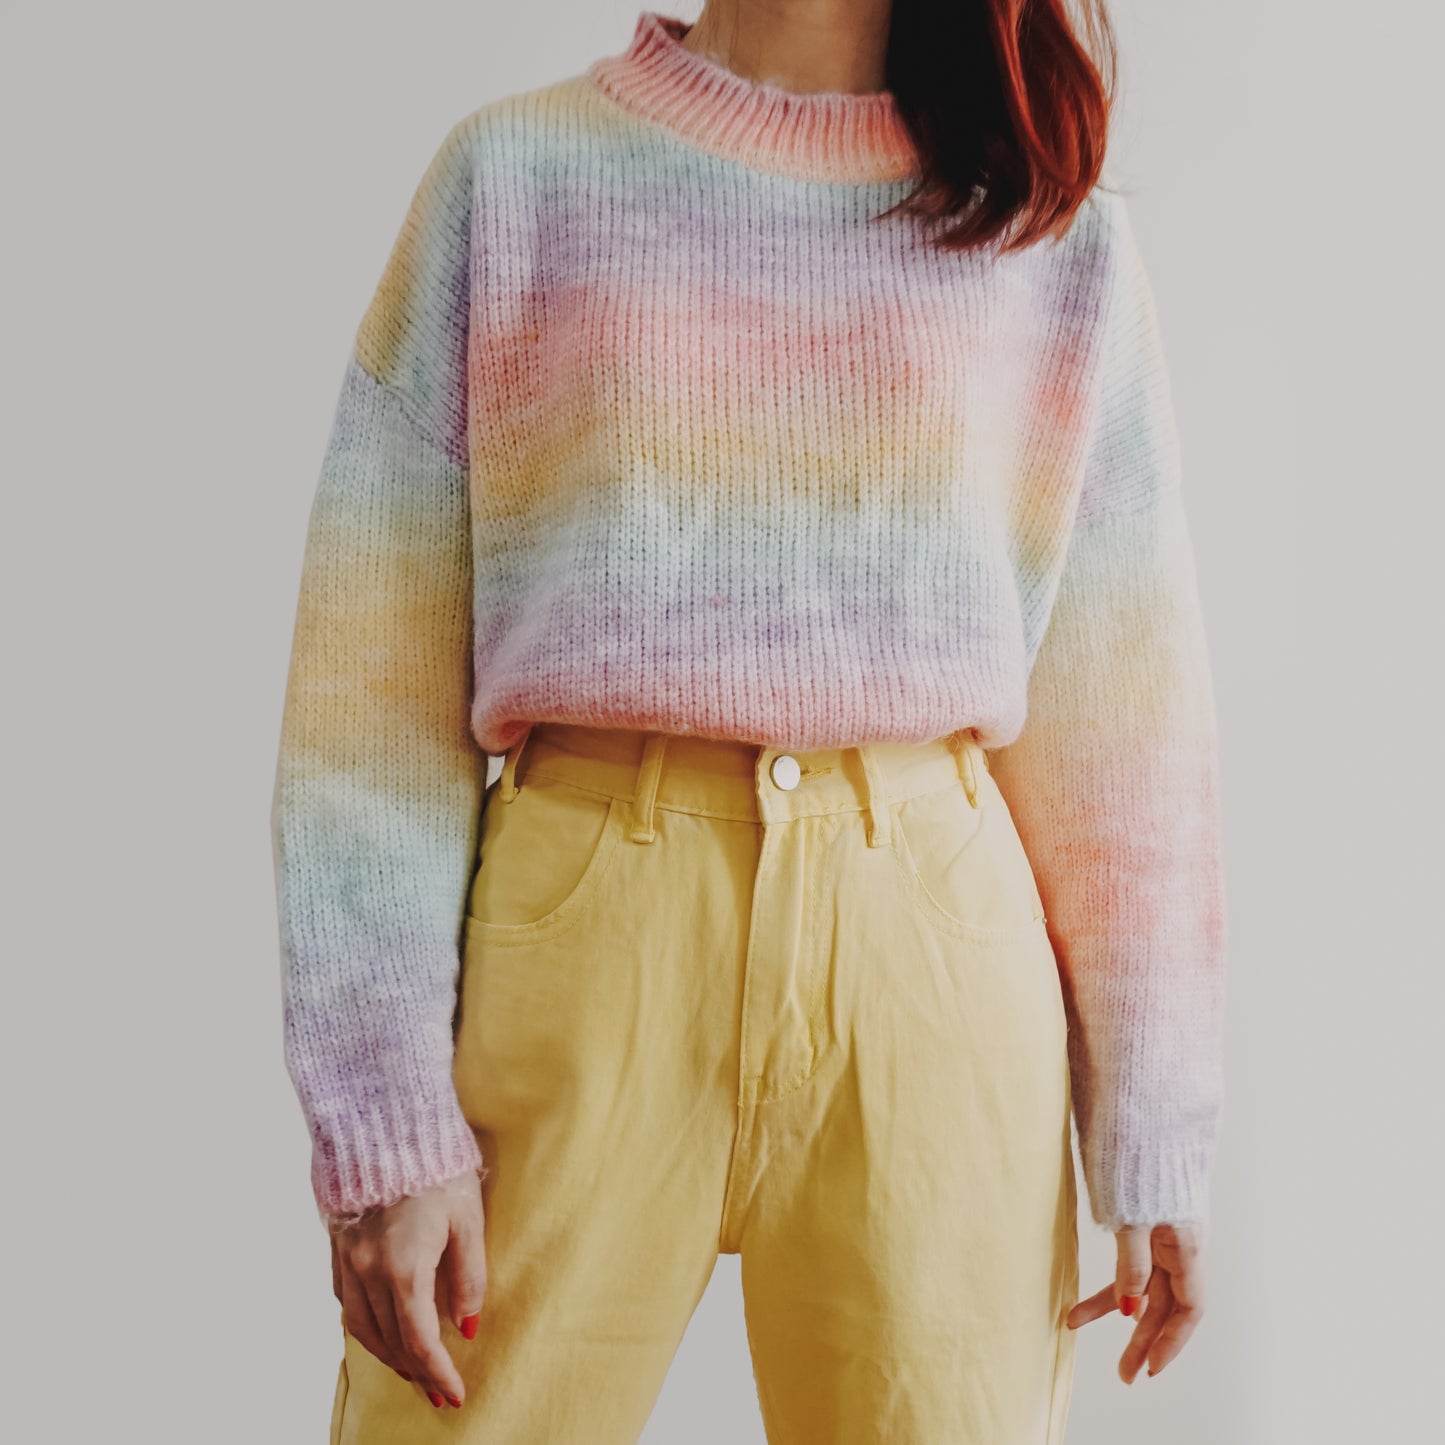 Pastel Ombre Stripe Sweater (Rainbow)